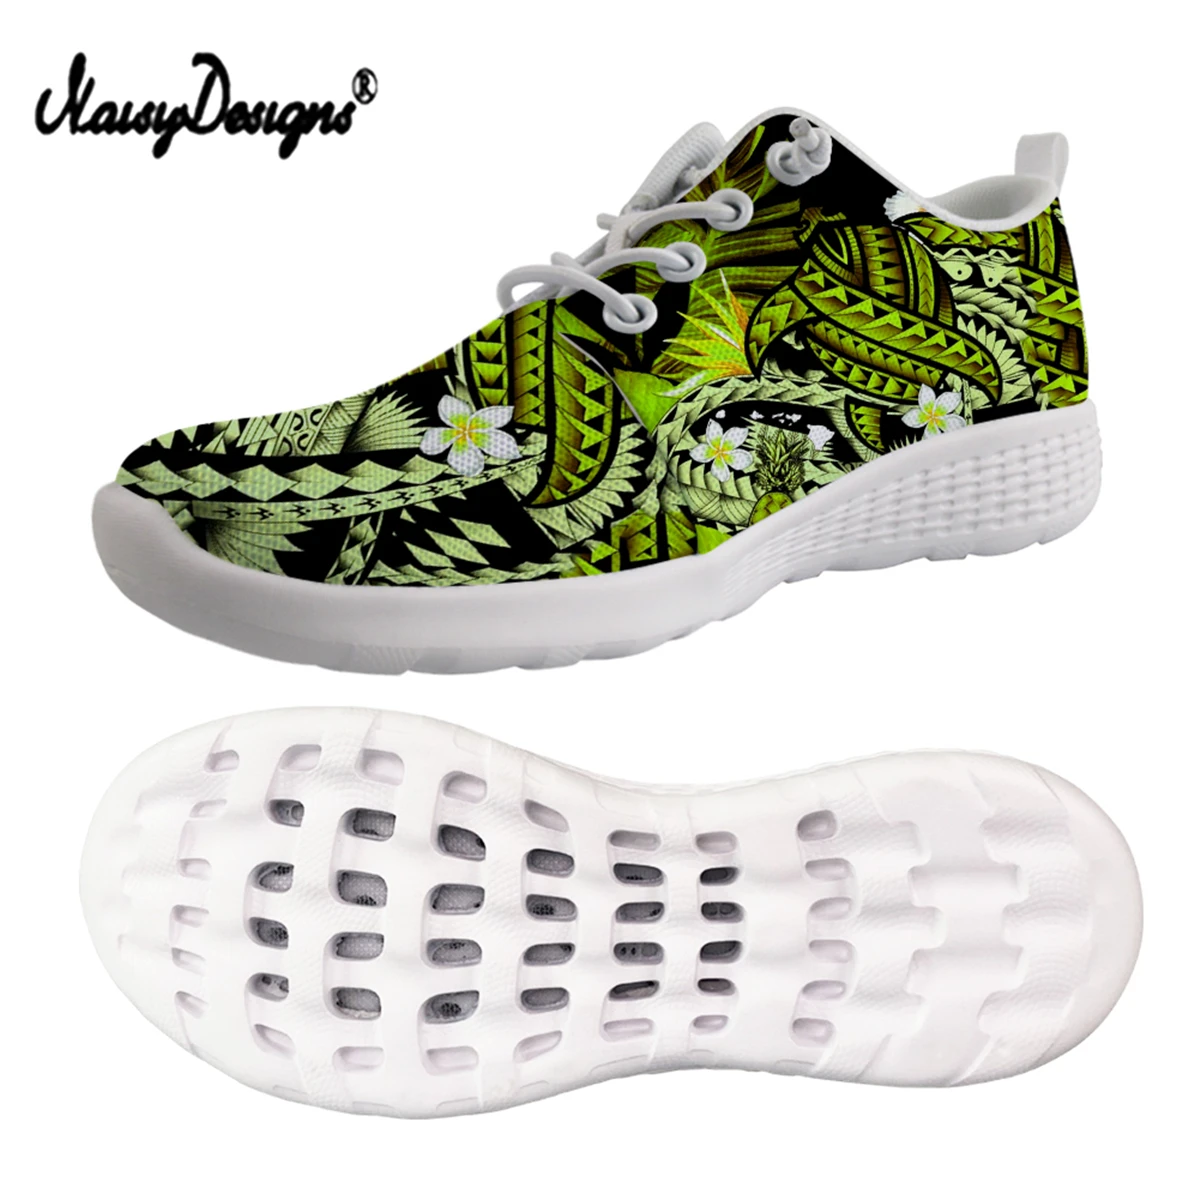 

Noisydesigns Mesh Water Shoes Men Summer Breathable Aqua Shoes Hawaii Tribal Banana Leaf Prints Upstream Shoes Beach Sandals